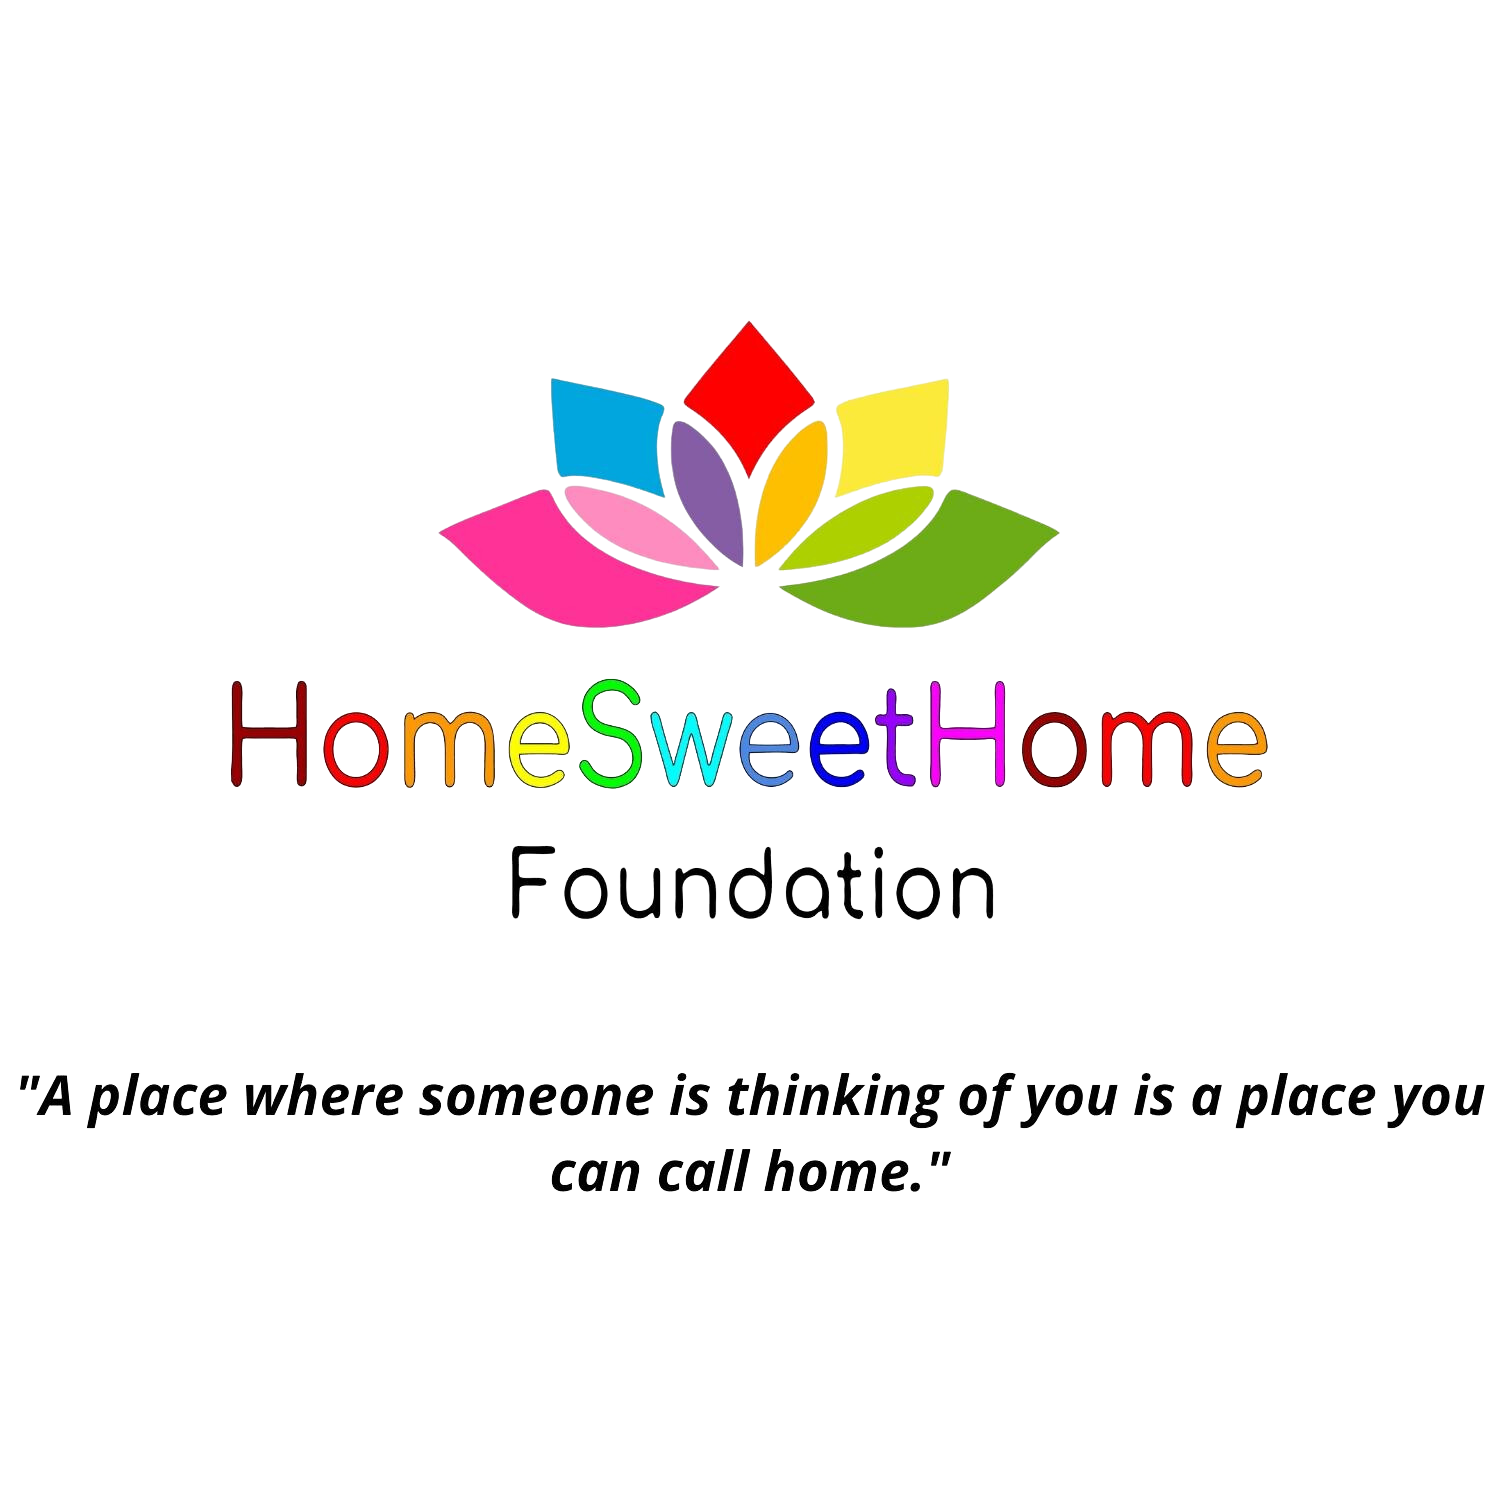 HomeSweetHome Foundation